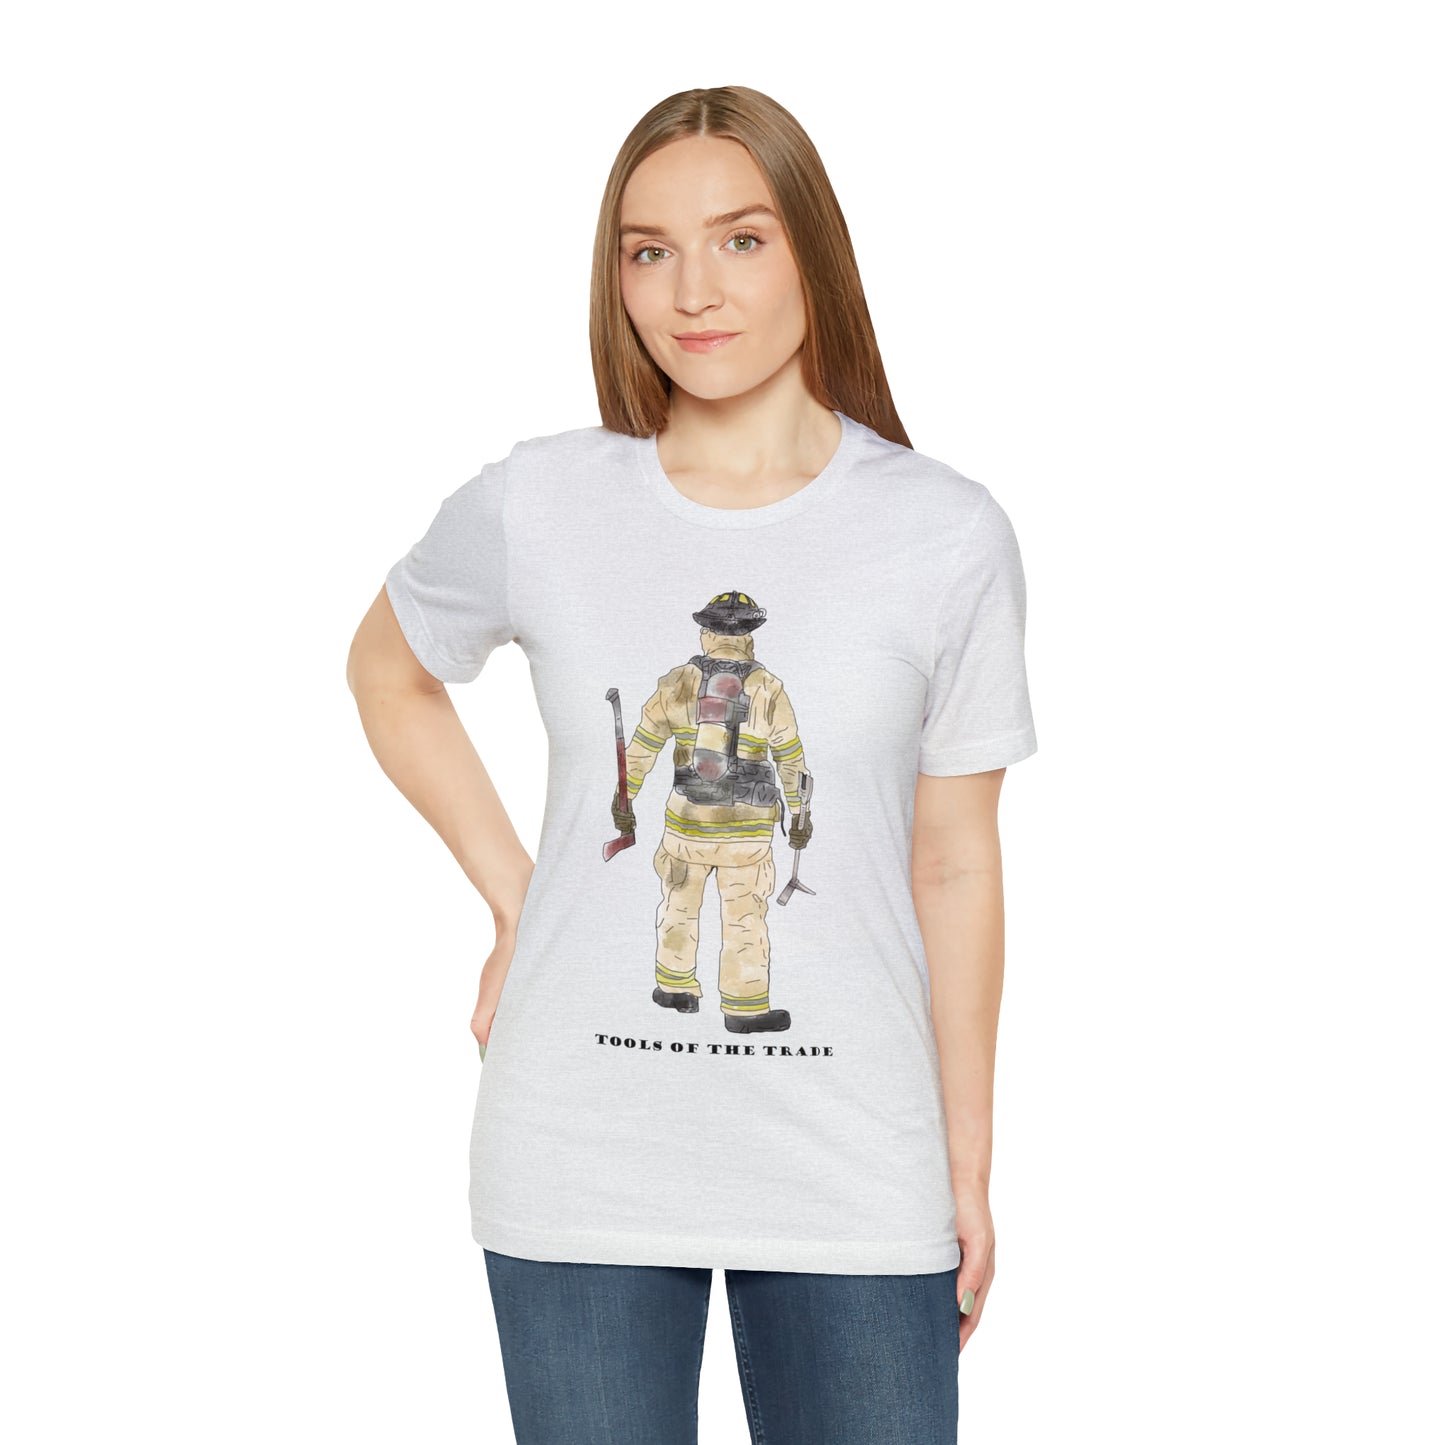 Firechick Designs Firefighter Tools of the Trade (Front) Unisex Ultra Cotton Tee First Responder Paramedic Shirt Fireman